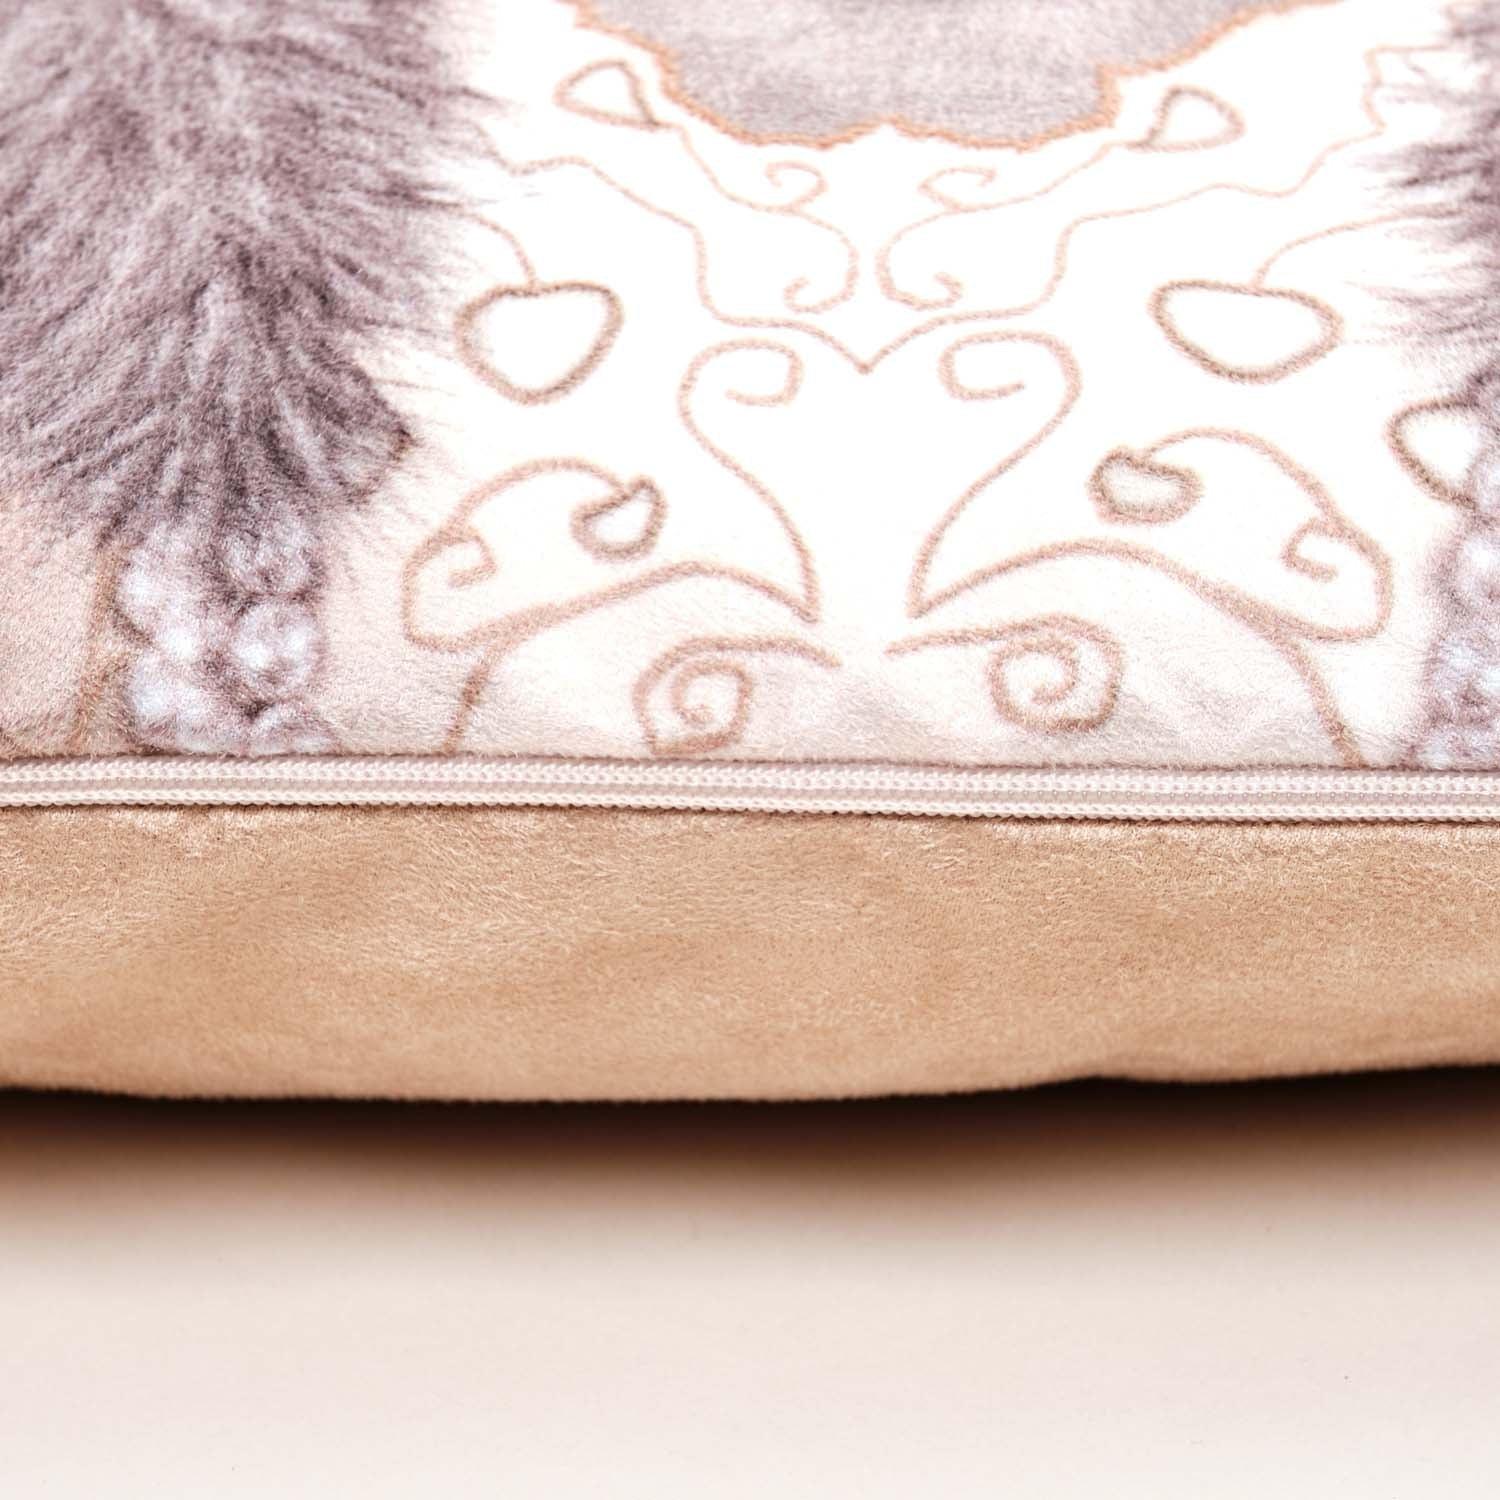 Mr. Mercury - Pets Rock Cushion - Handmade Cushions UK - WeLoveCushions